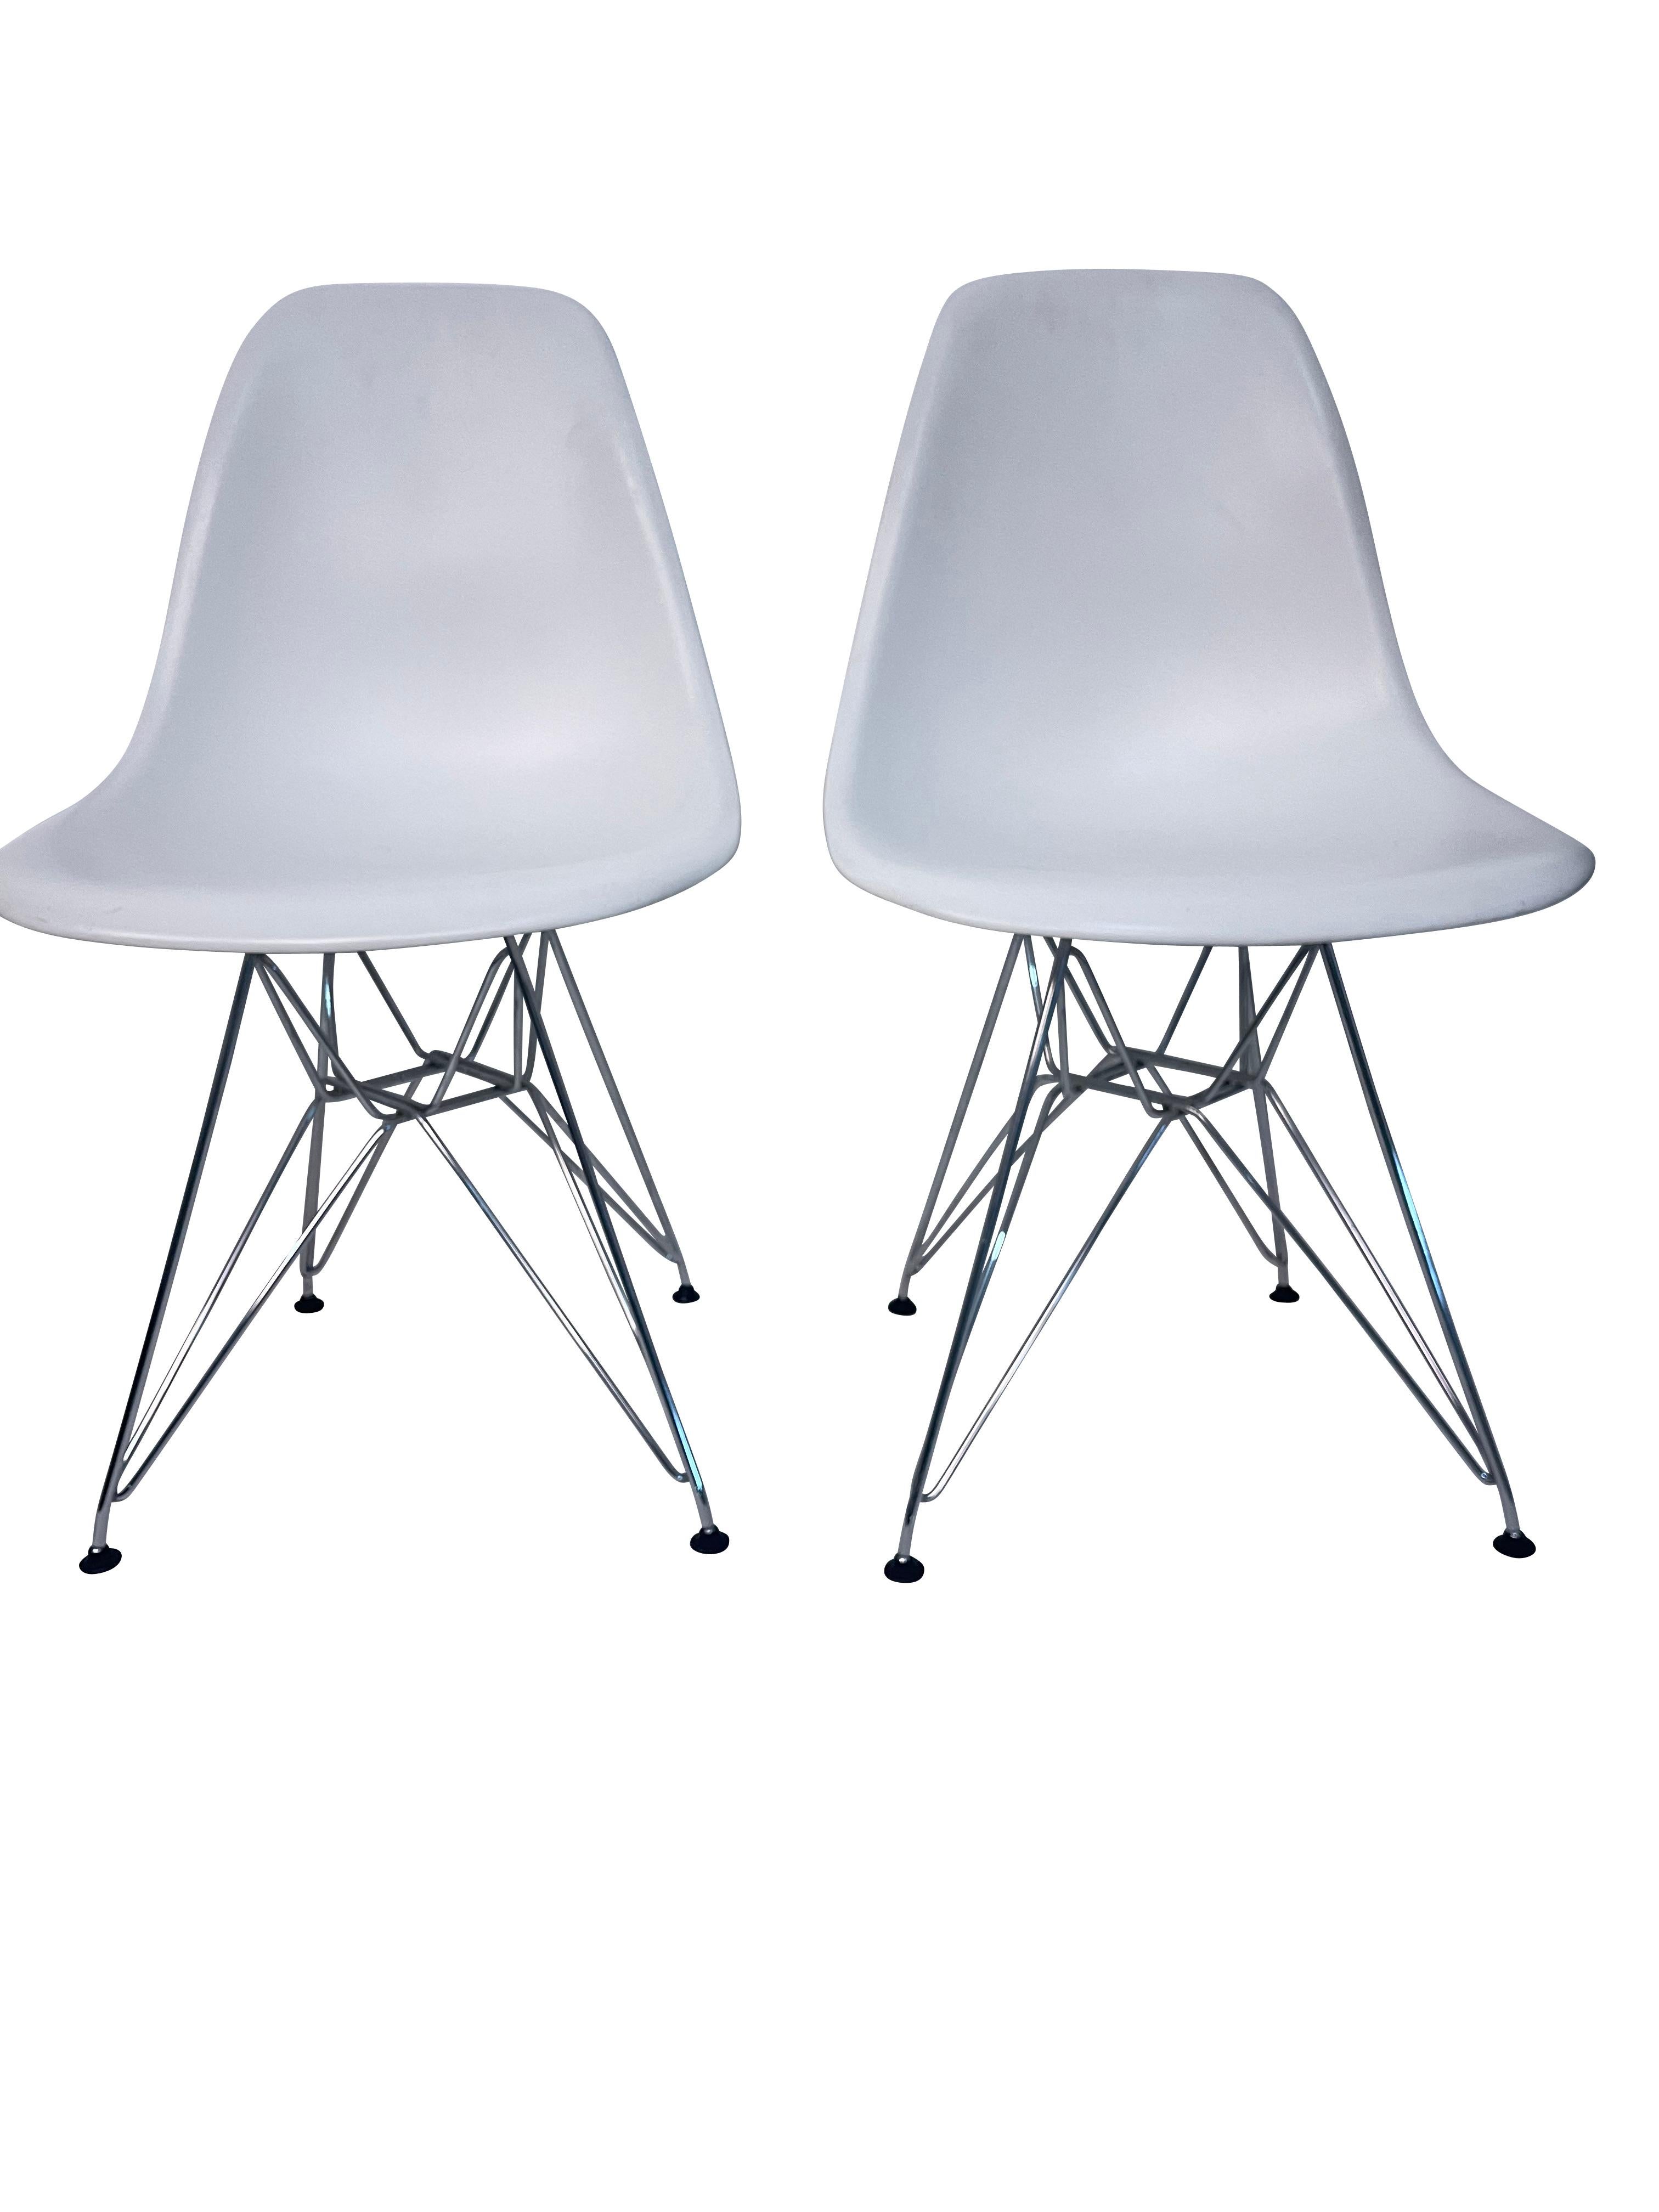 Eero Saarinen Marble Top Tulip Table and Four White Eames Eiffel Tour Base Chair 1